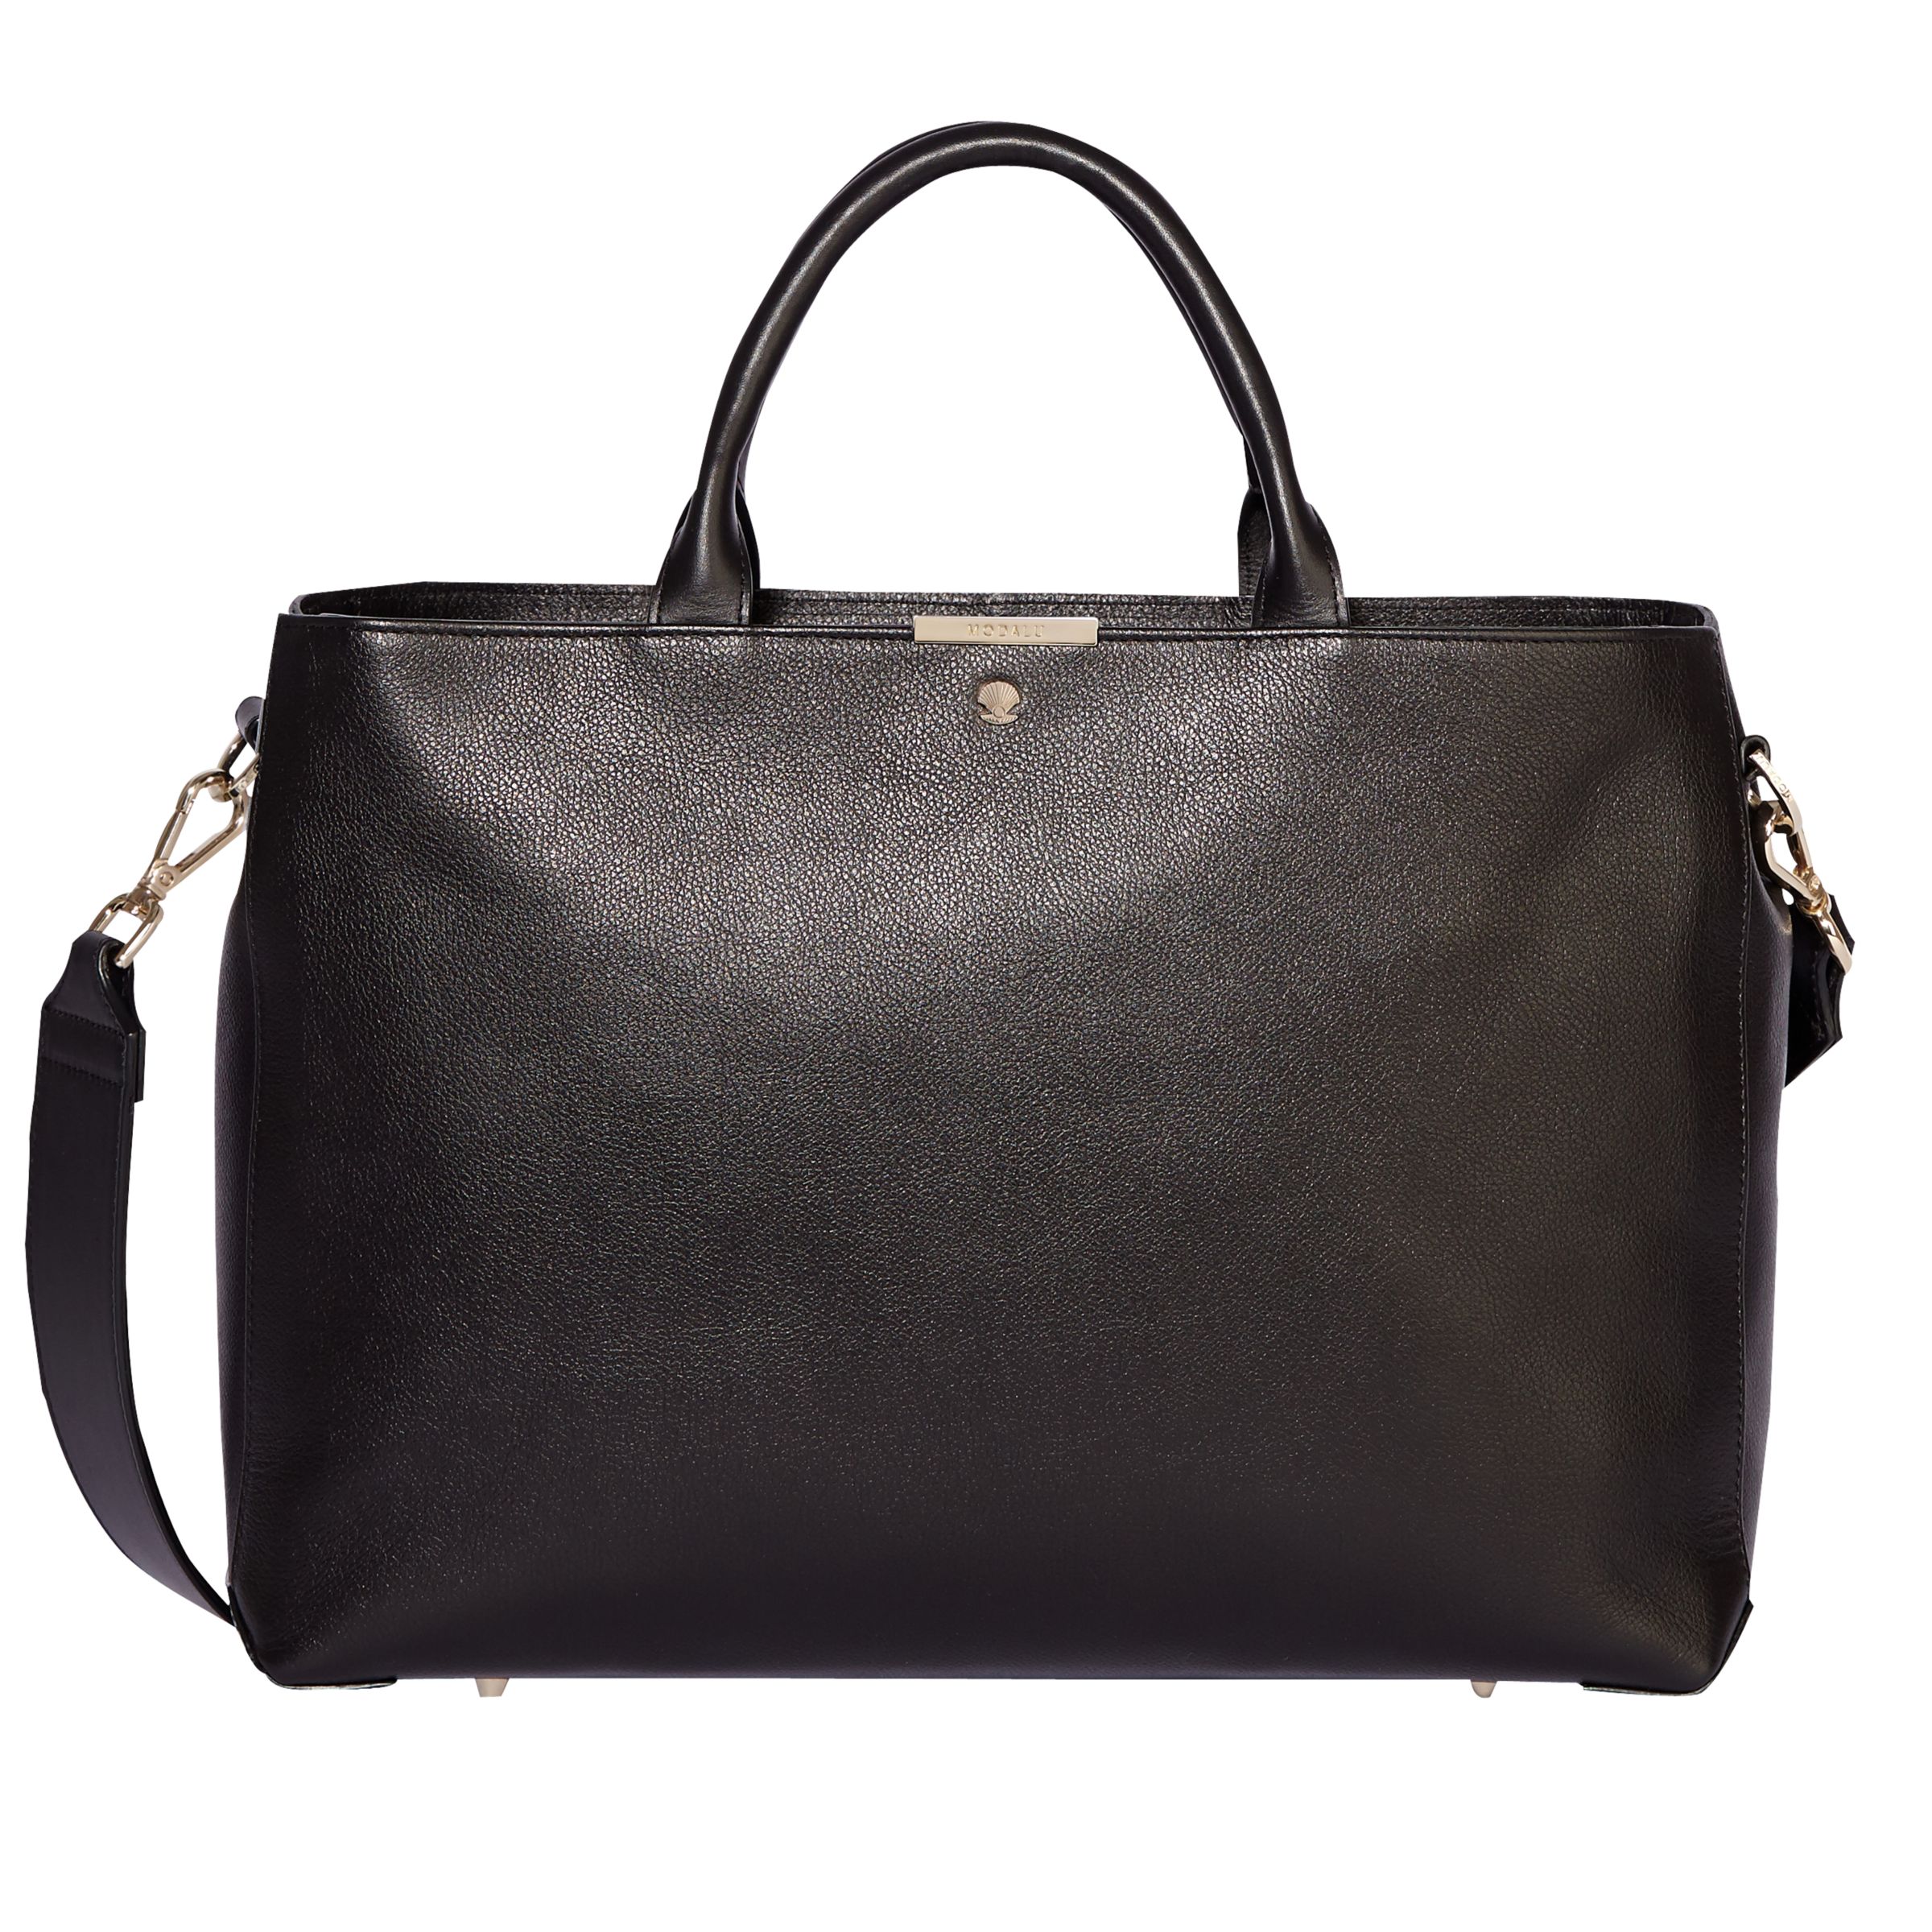 Modalu Bess Leather Large Tote Bag at John Lewis & Partners